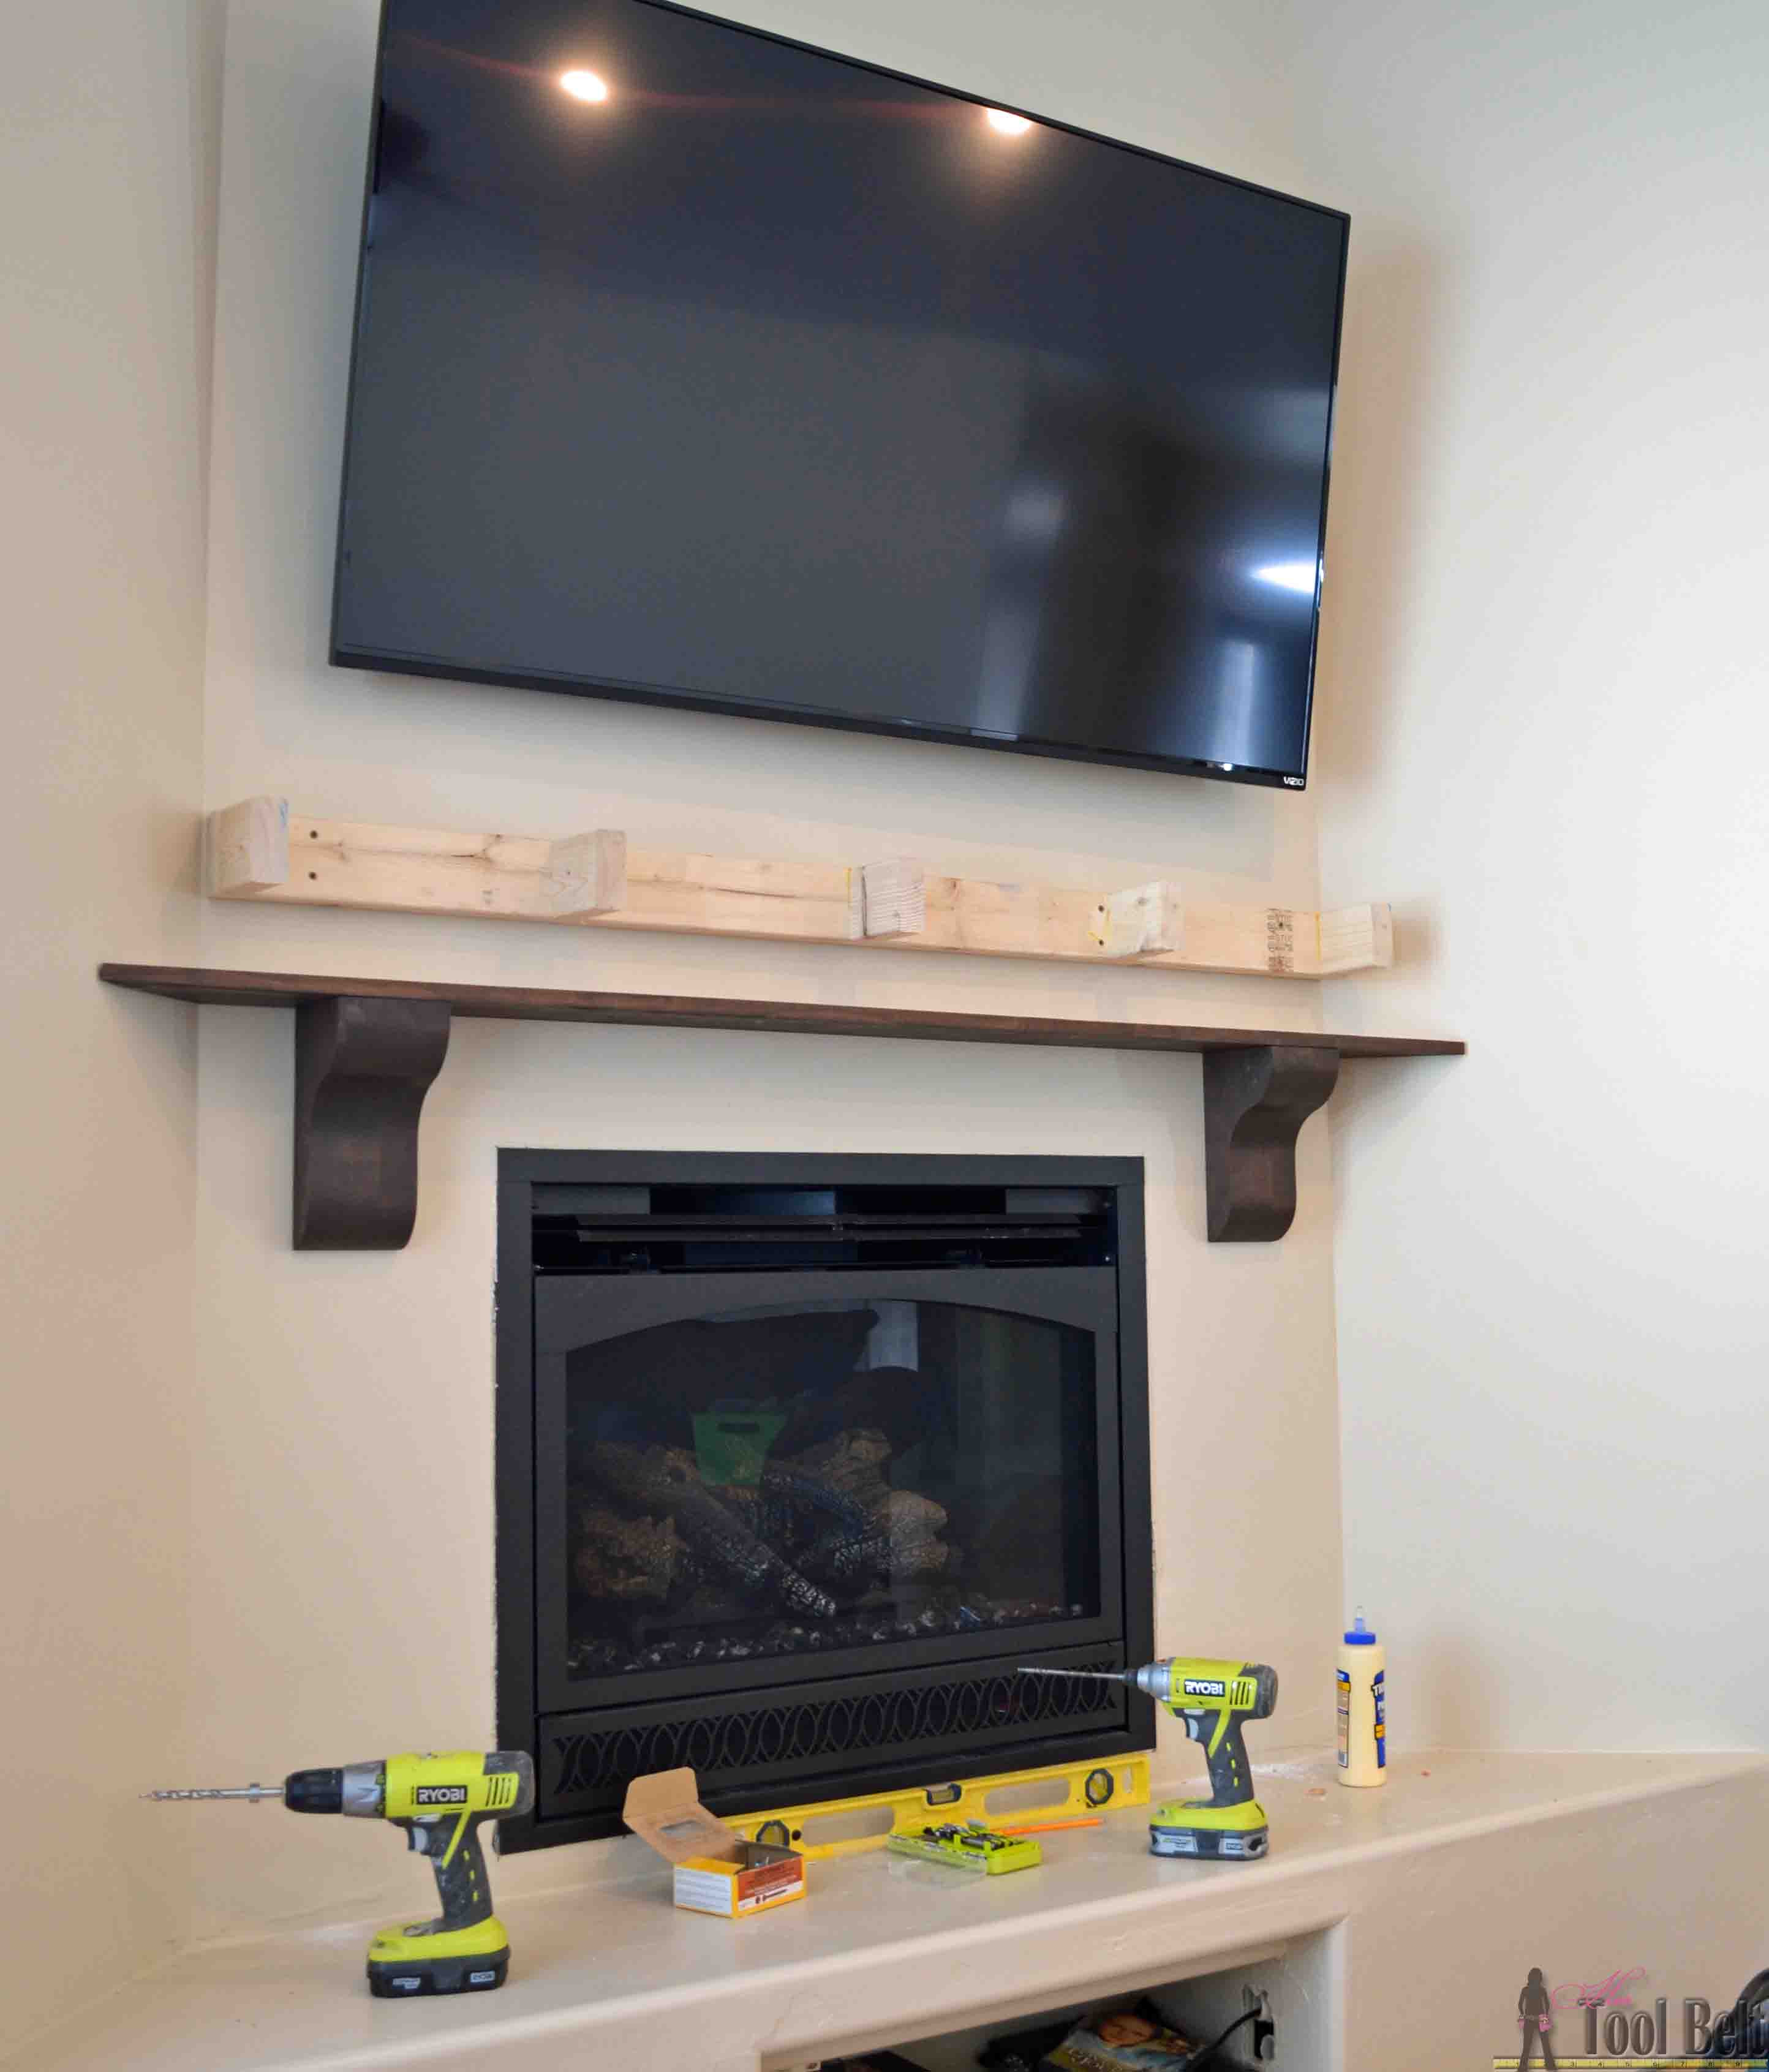 Best ideas about DIY Fireplace Mantel Shelf
. Save or Pin DIY Fireplace Mantel Shelf Her Tool Belt Now.